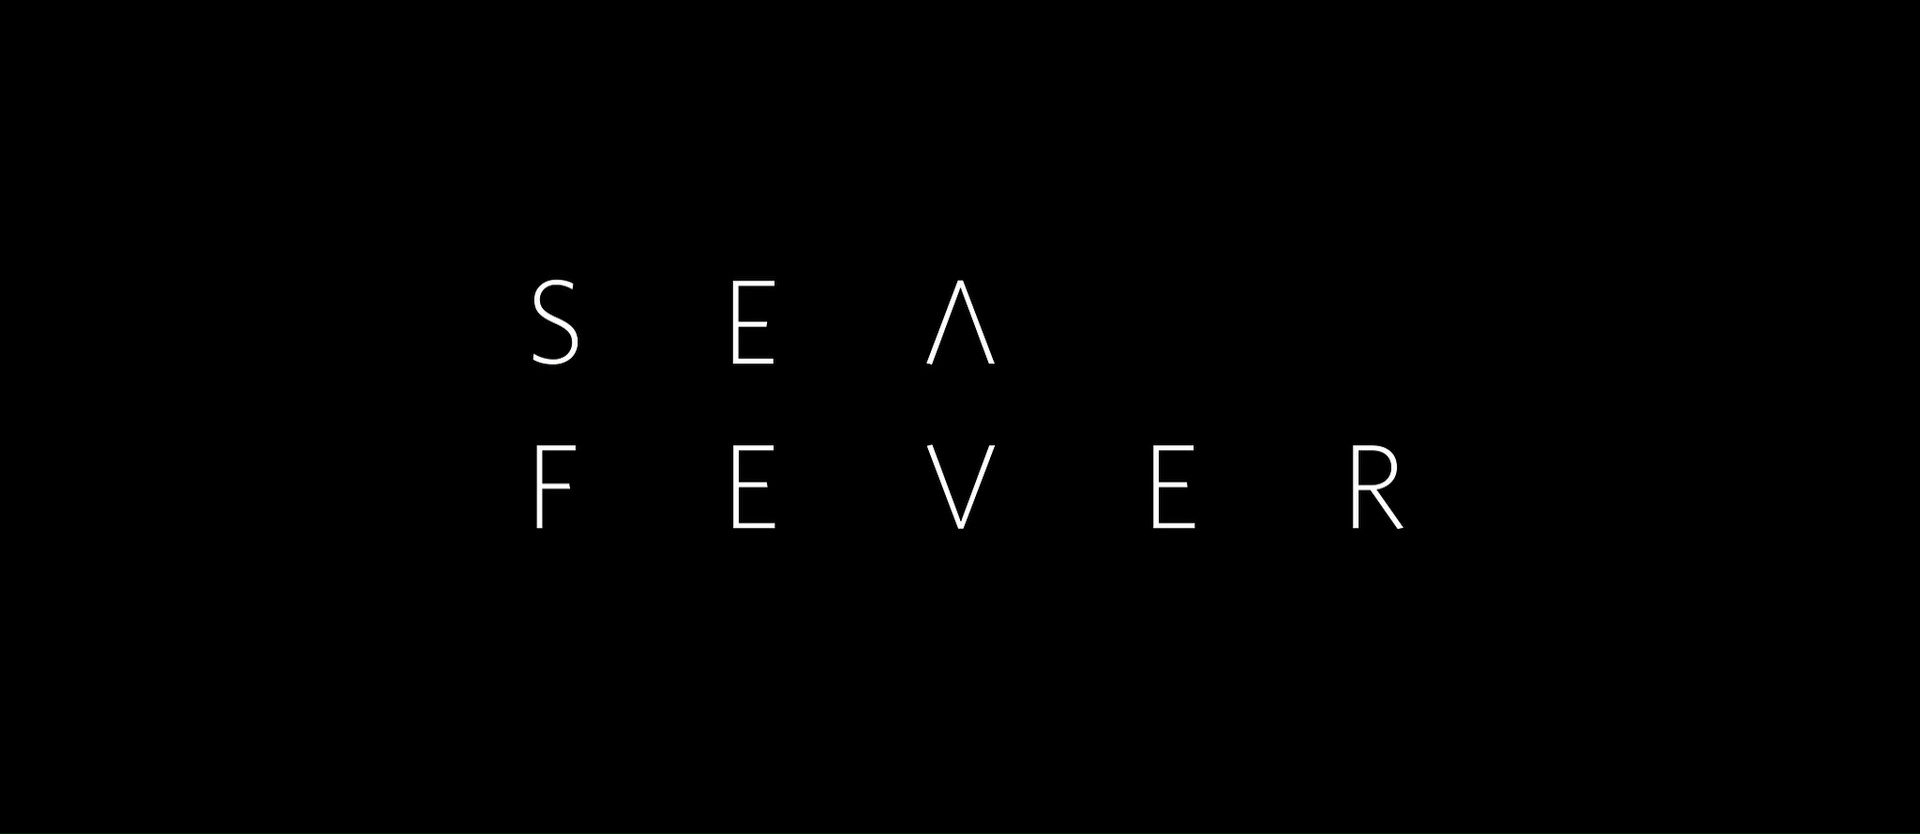 SEA FEVER de Neasa Hardiman (2019)